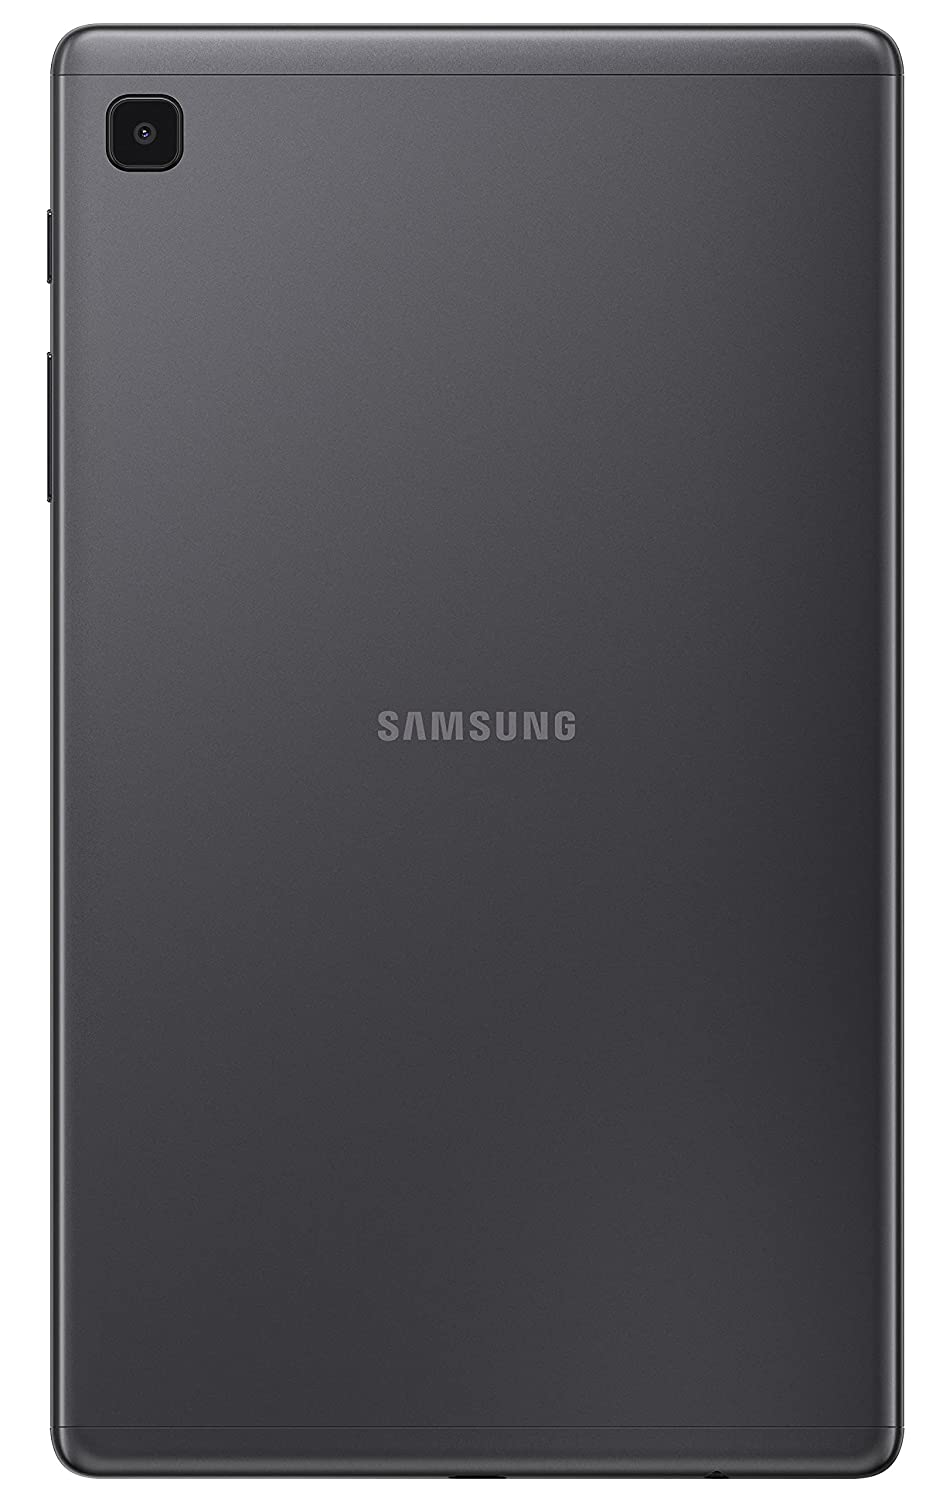 Open Box, Unused Samsung Galaxy Tab A7 Lite 22.05 cm 8.7 inch Slim Metal Body Dolby Atmos Sound, RAM 3 GB, ROM 32 GB Expandable, Wi-Fi-only Tablet